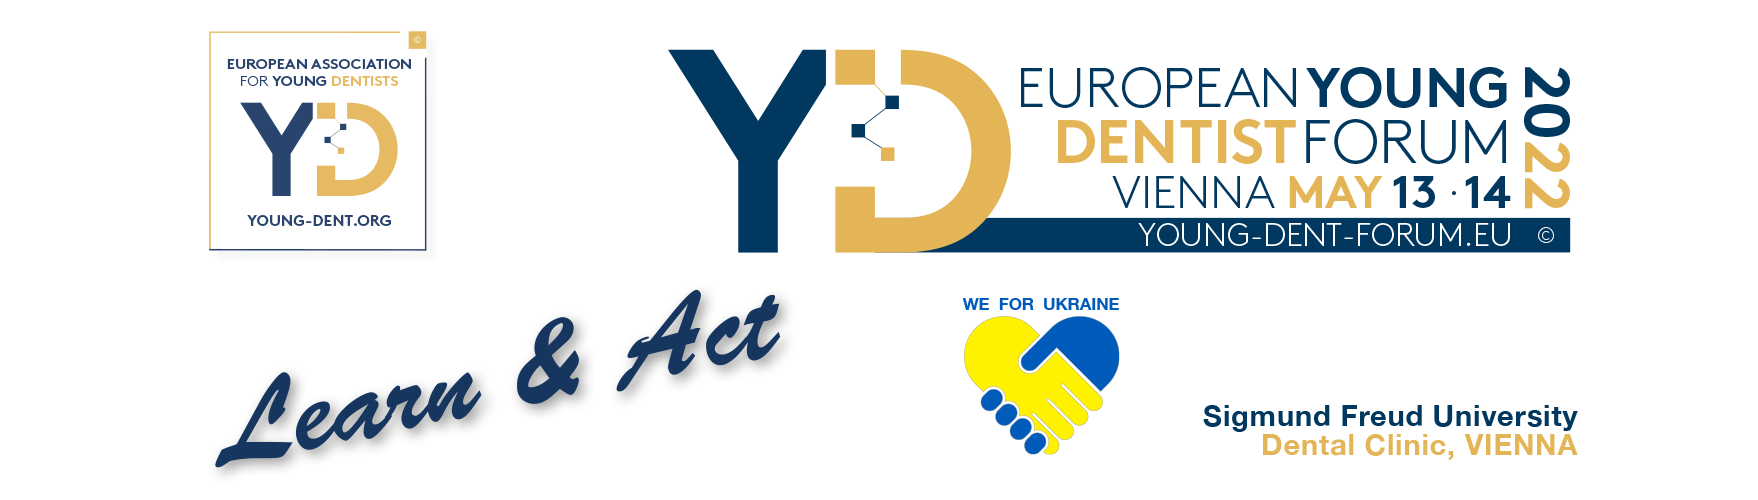 EUROPEAN YOUNG DENTIST FORUM